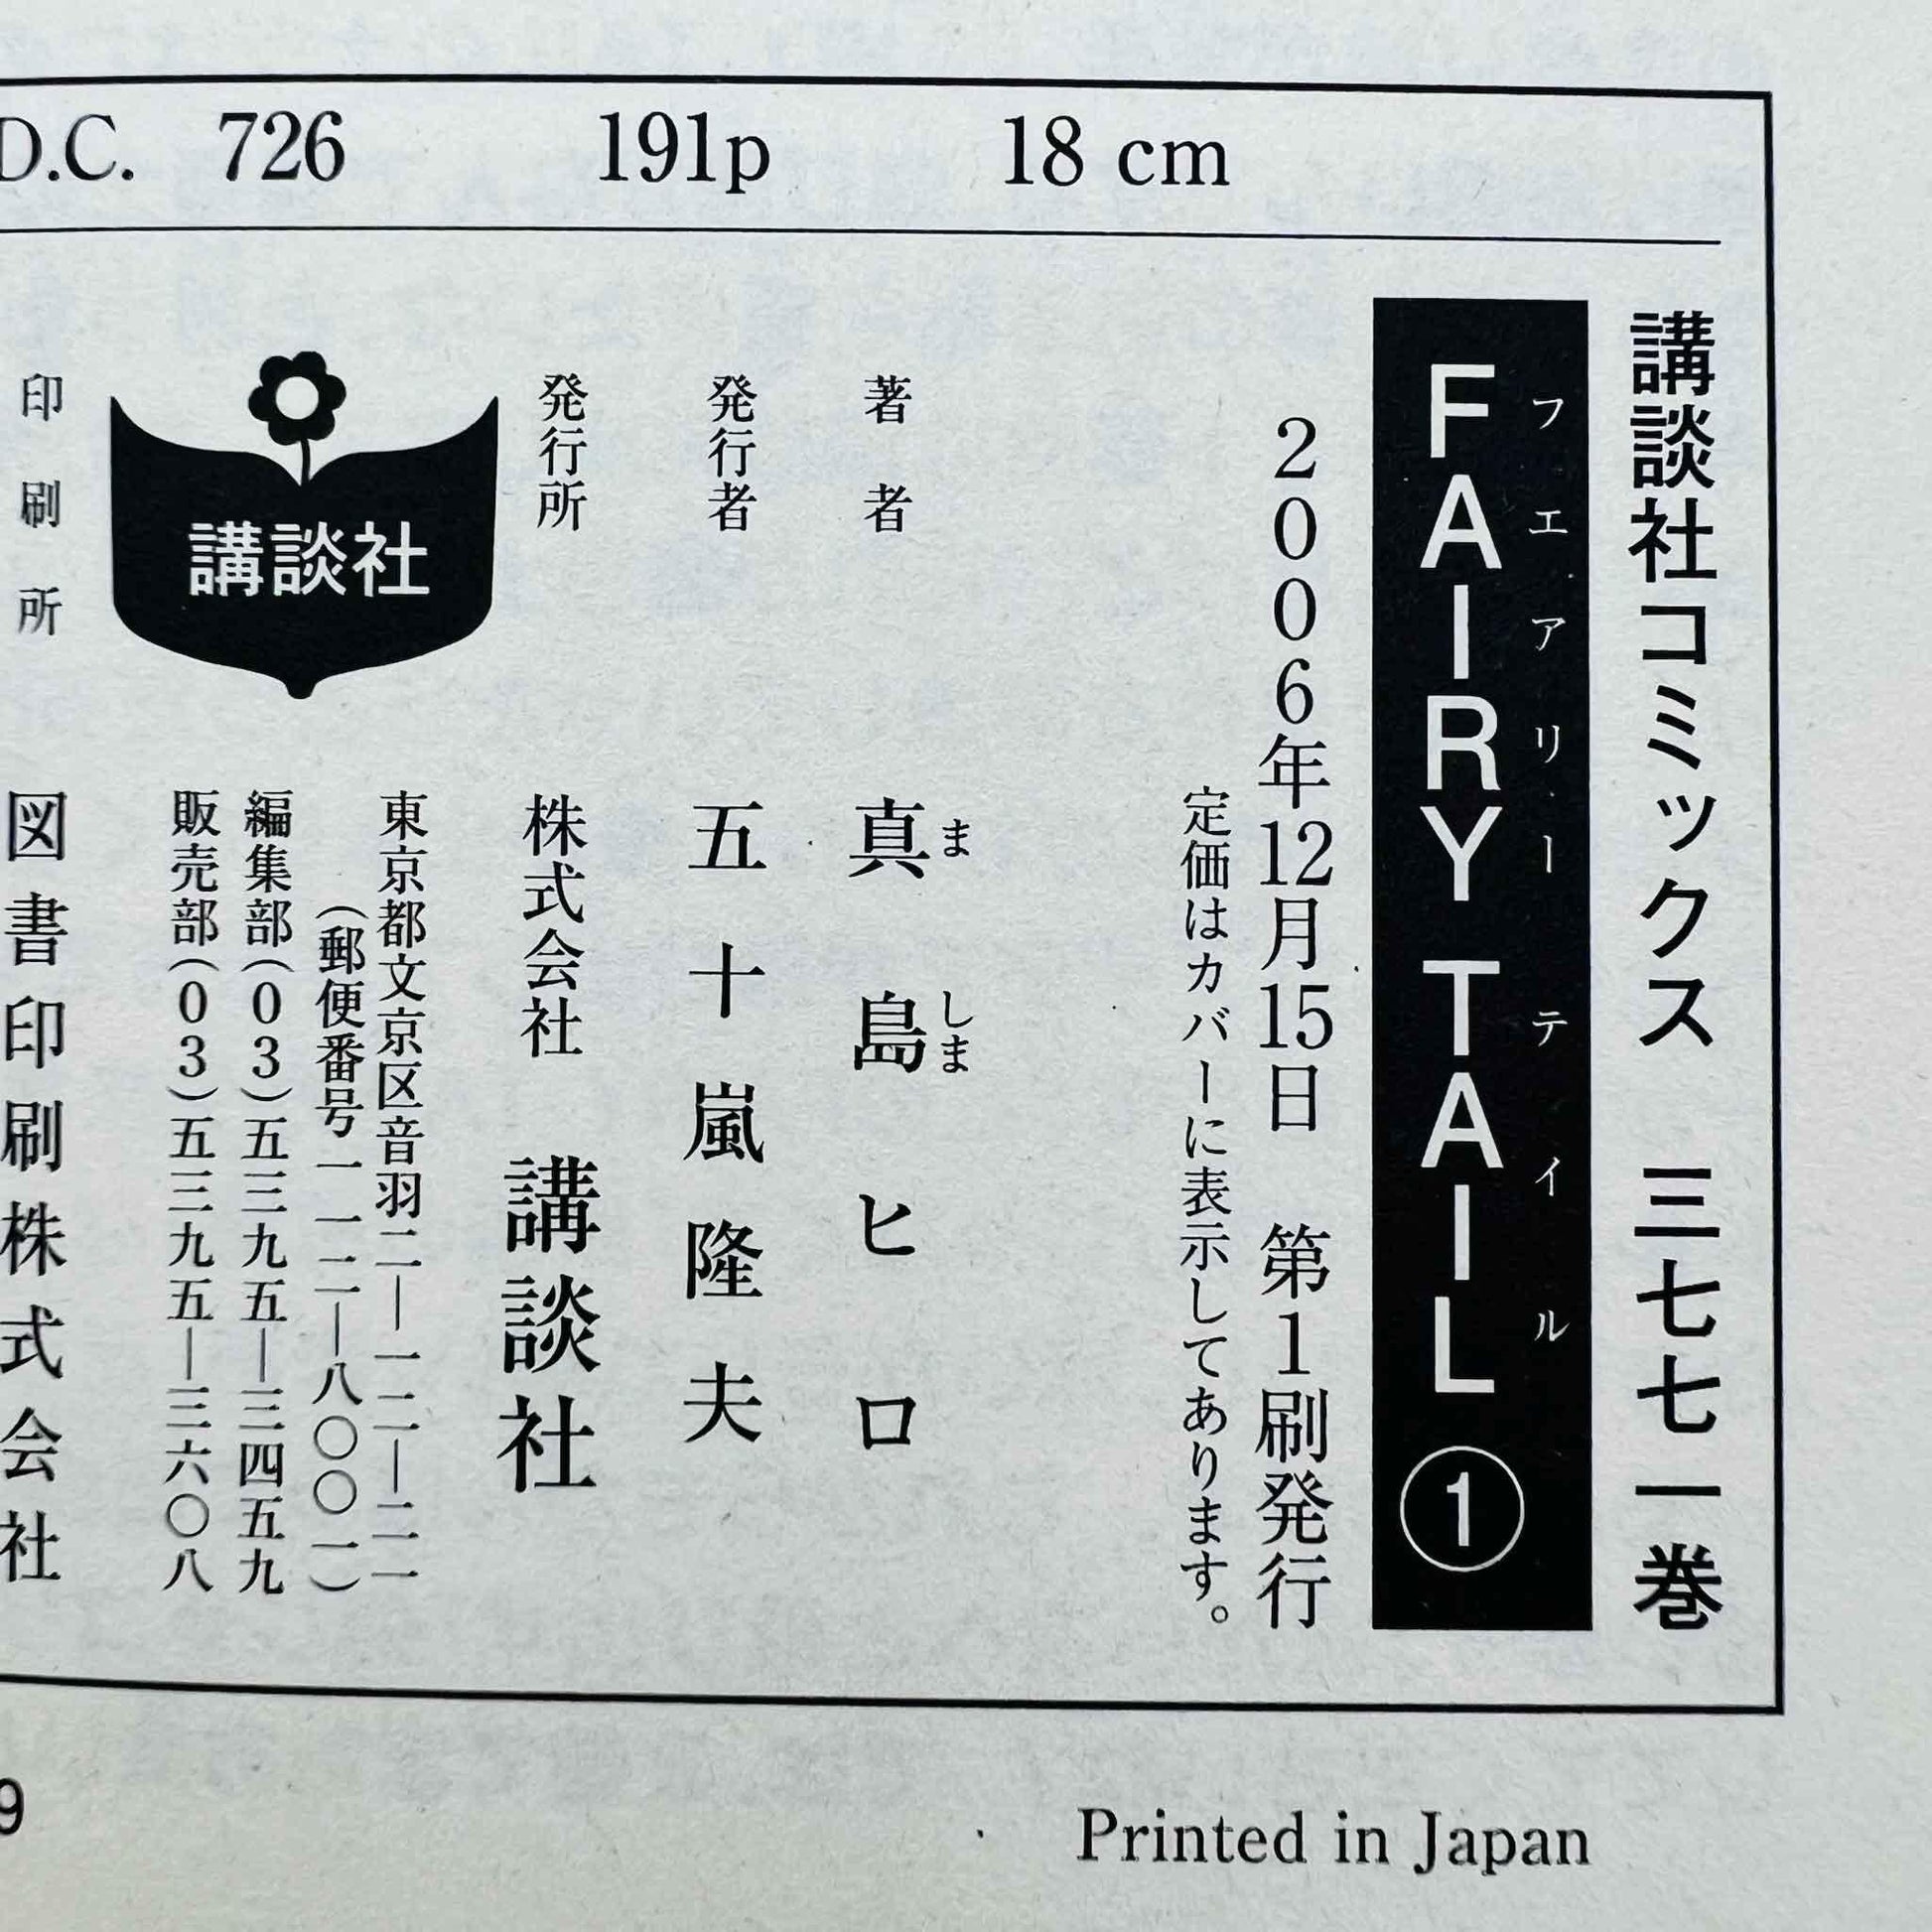 Fairy Tail - Volume 01 - 1stPrint.net - 1st First Print Edition Manga Store - M-FAIRY-01-003